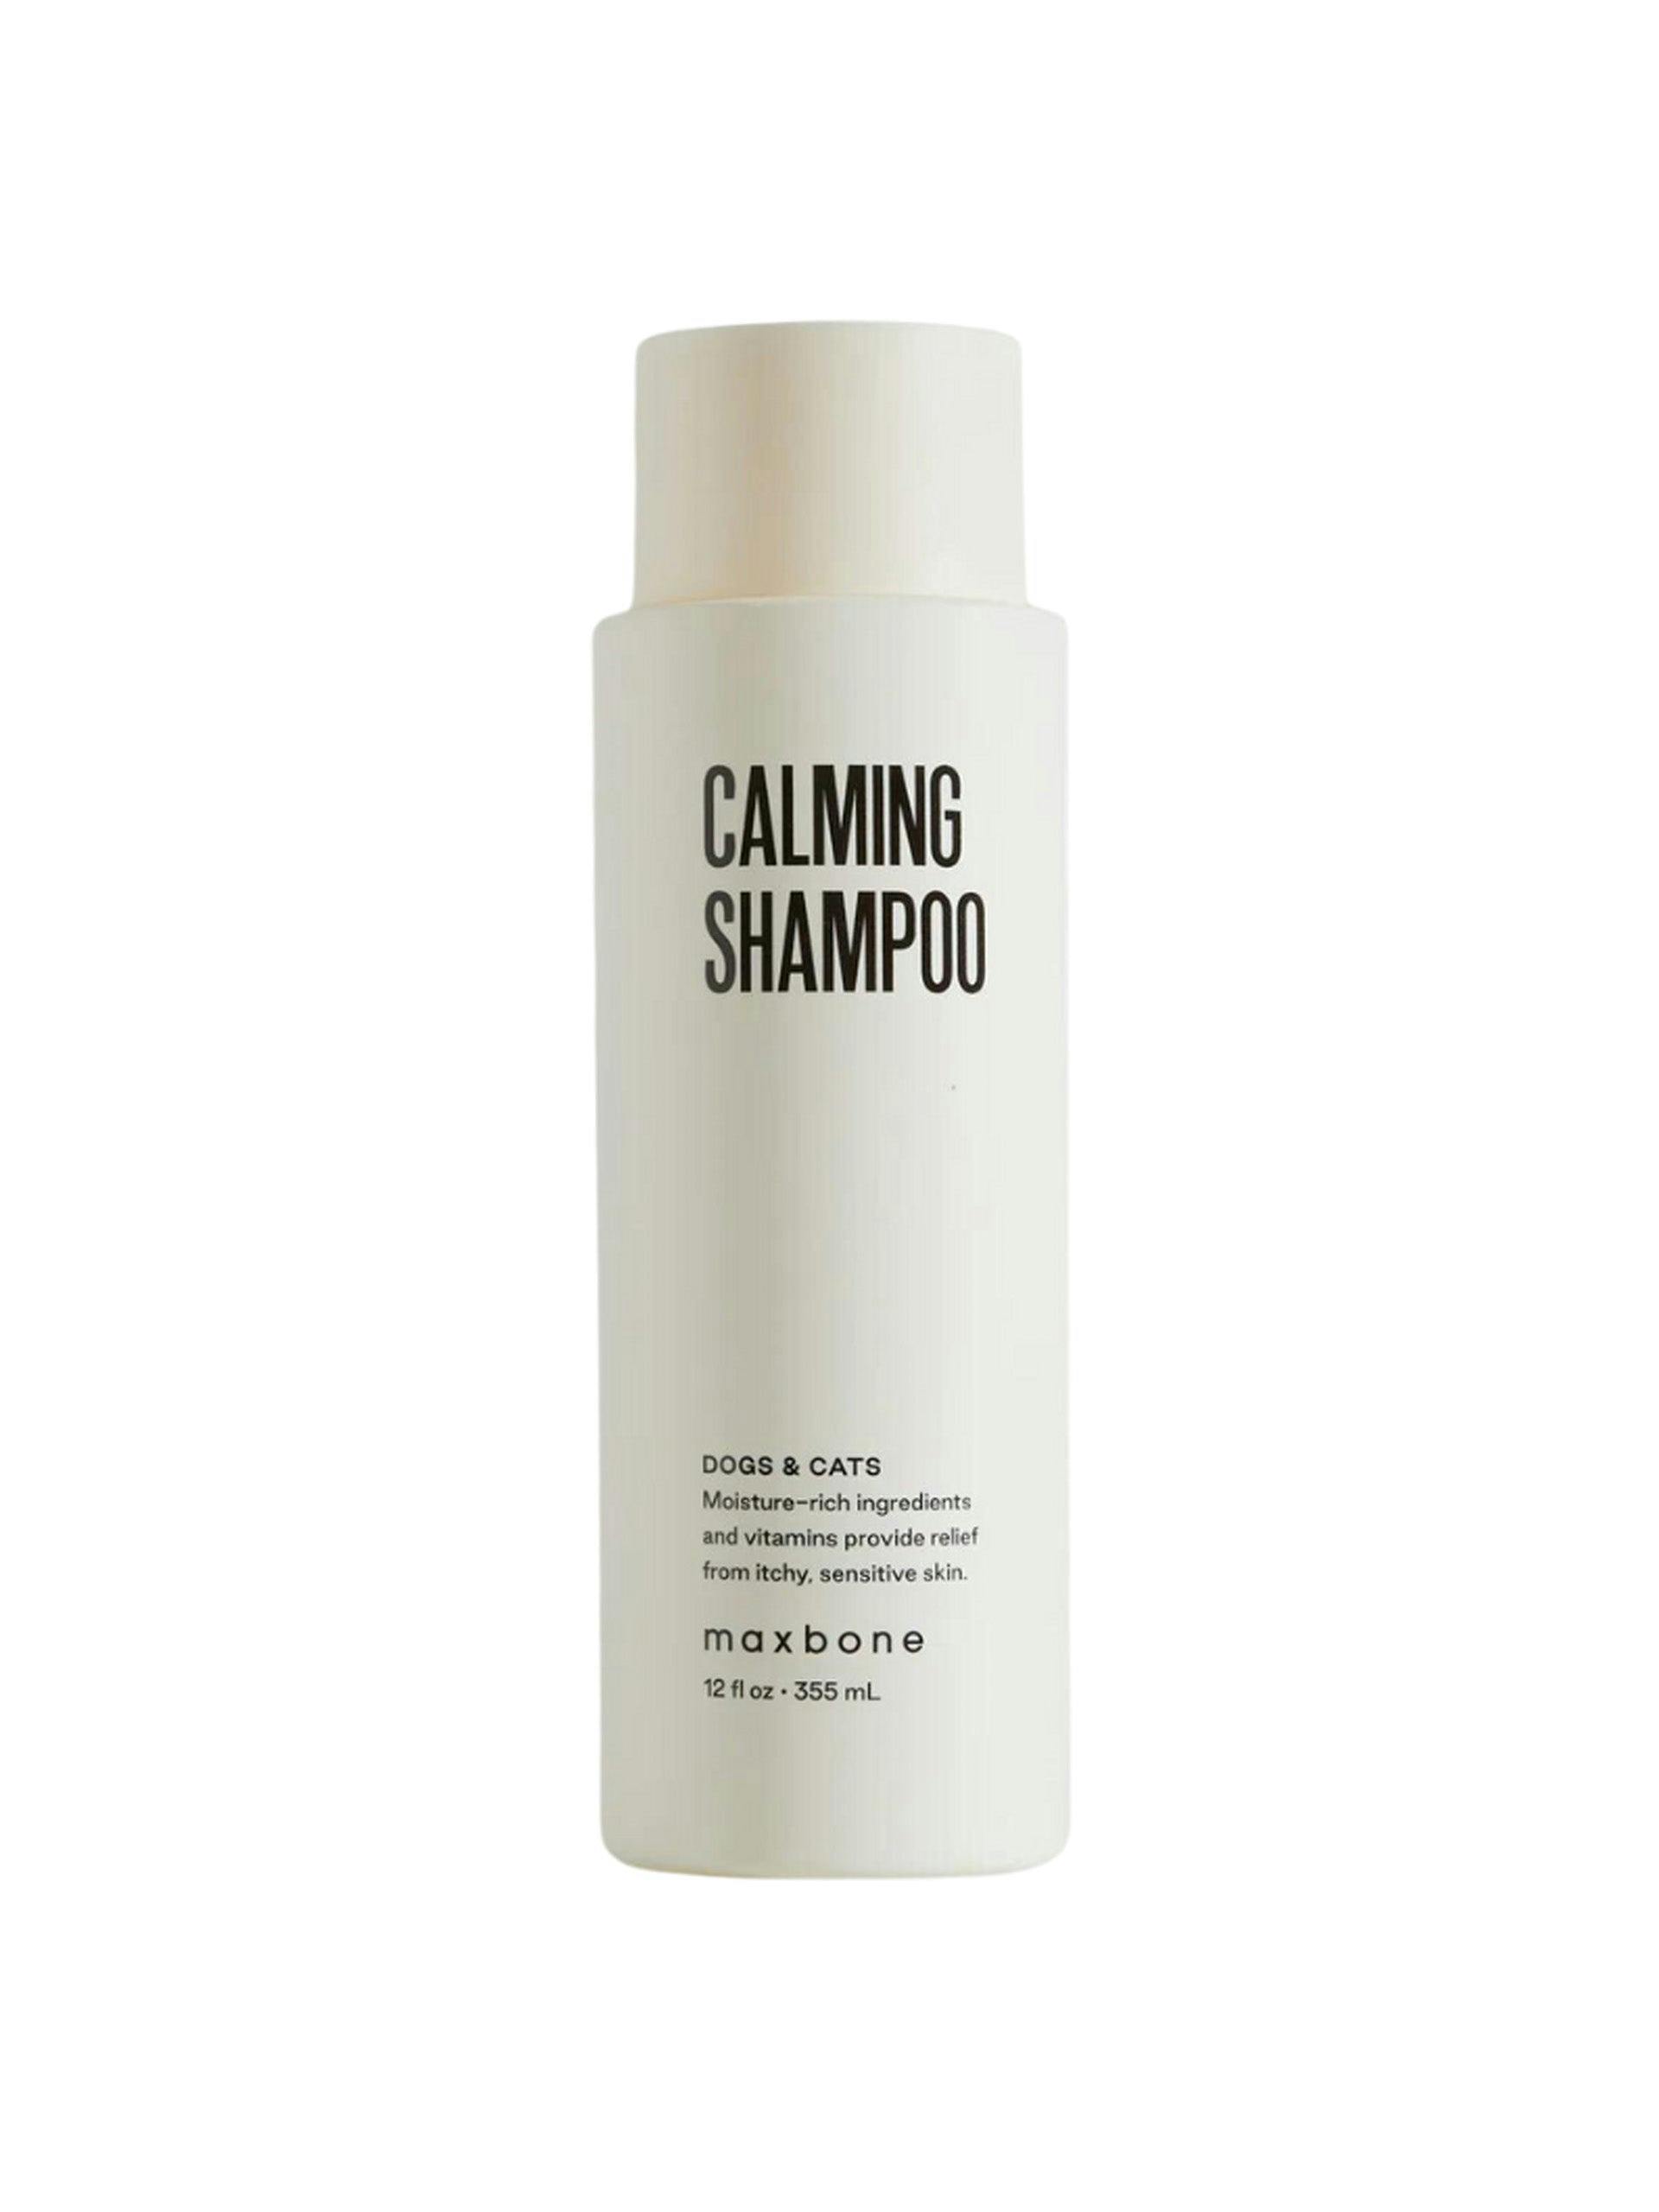 Calming dog shampoo